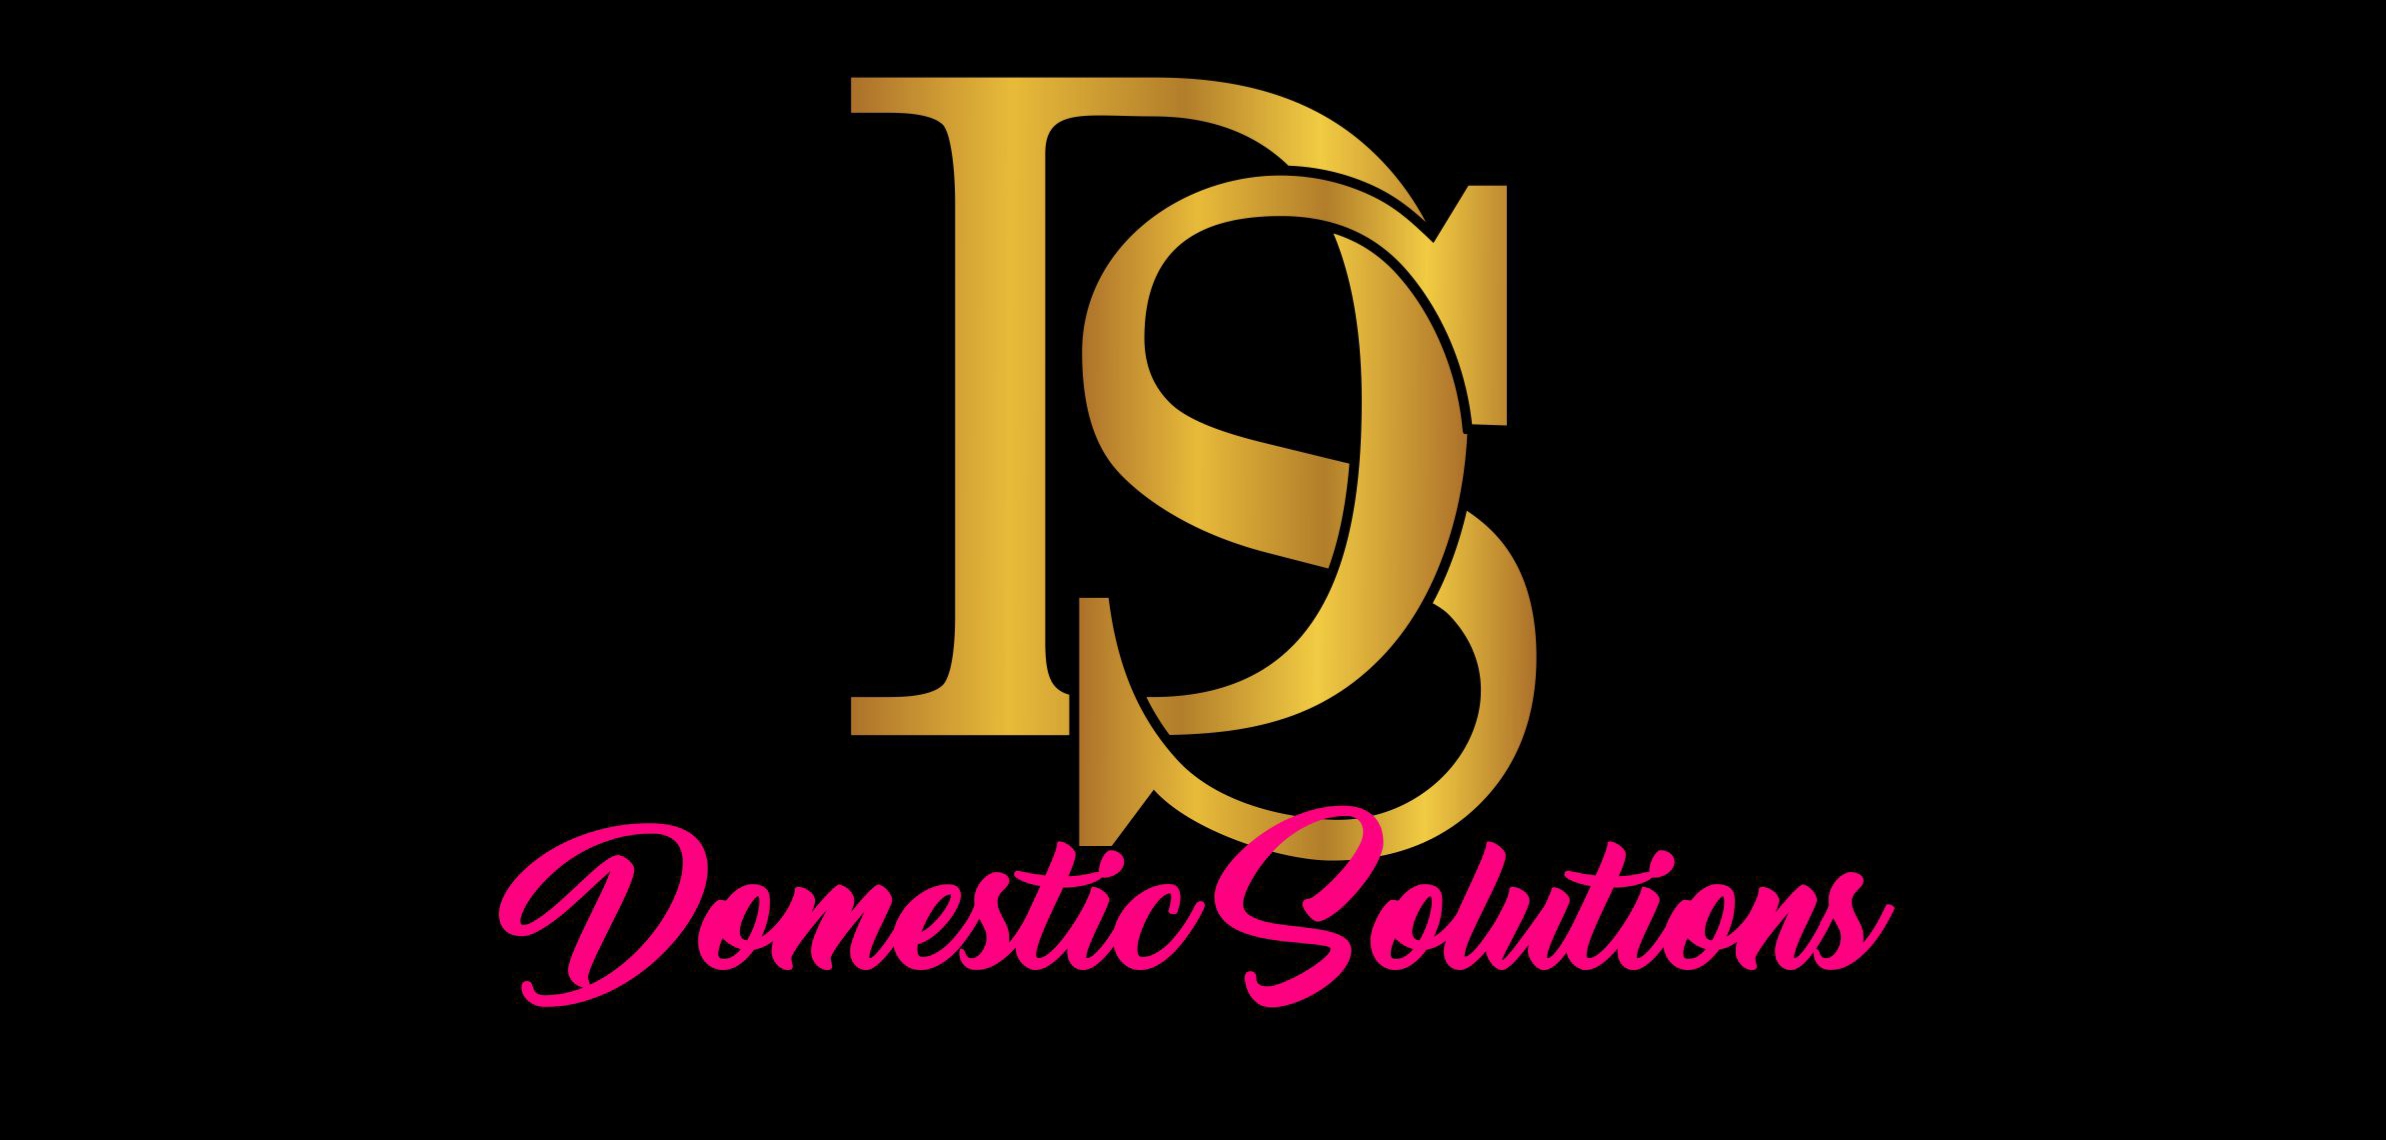 Domestic Solutions Logo